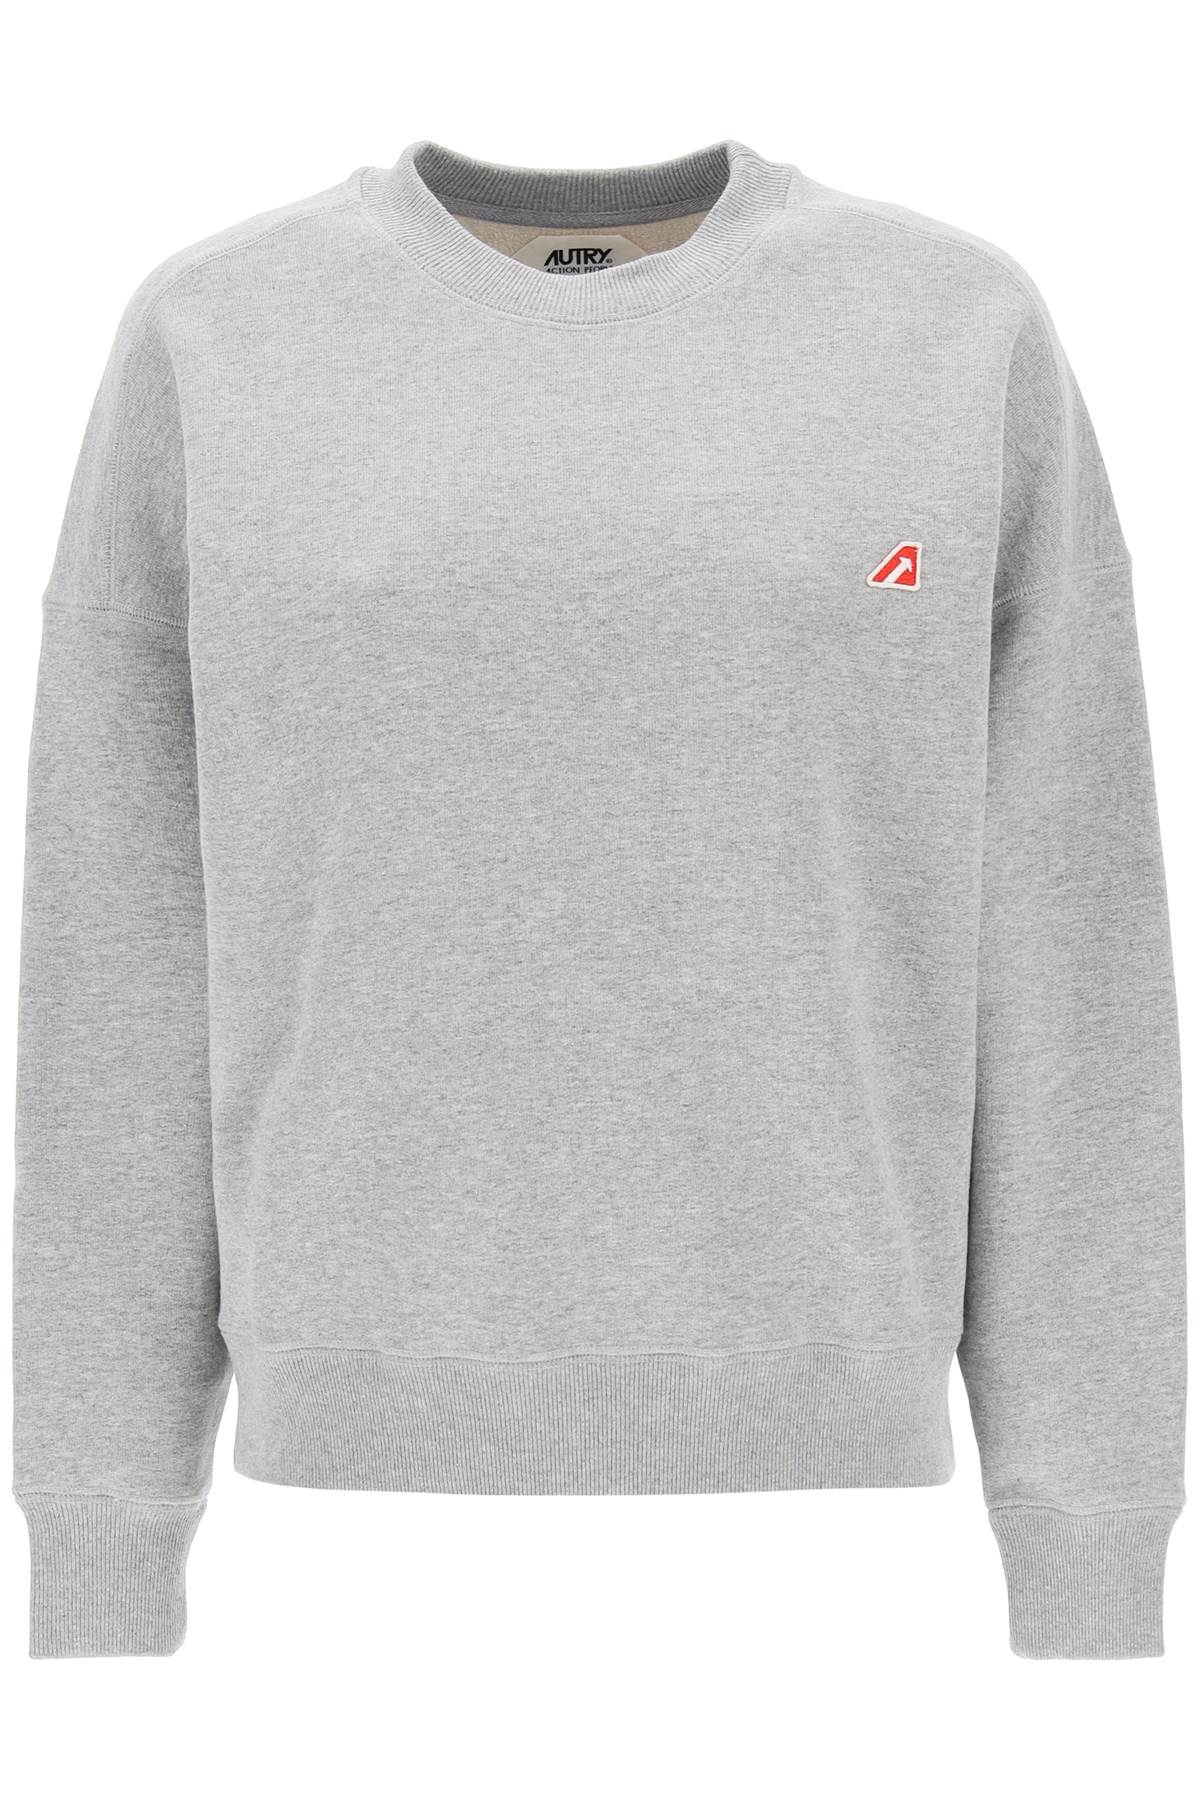 Autry crew-neck sweatshirt with logo patch-0